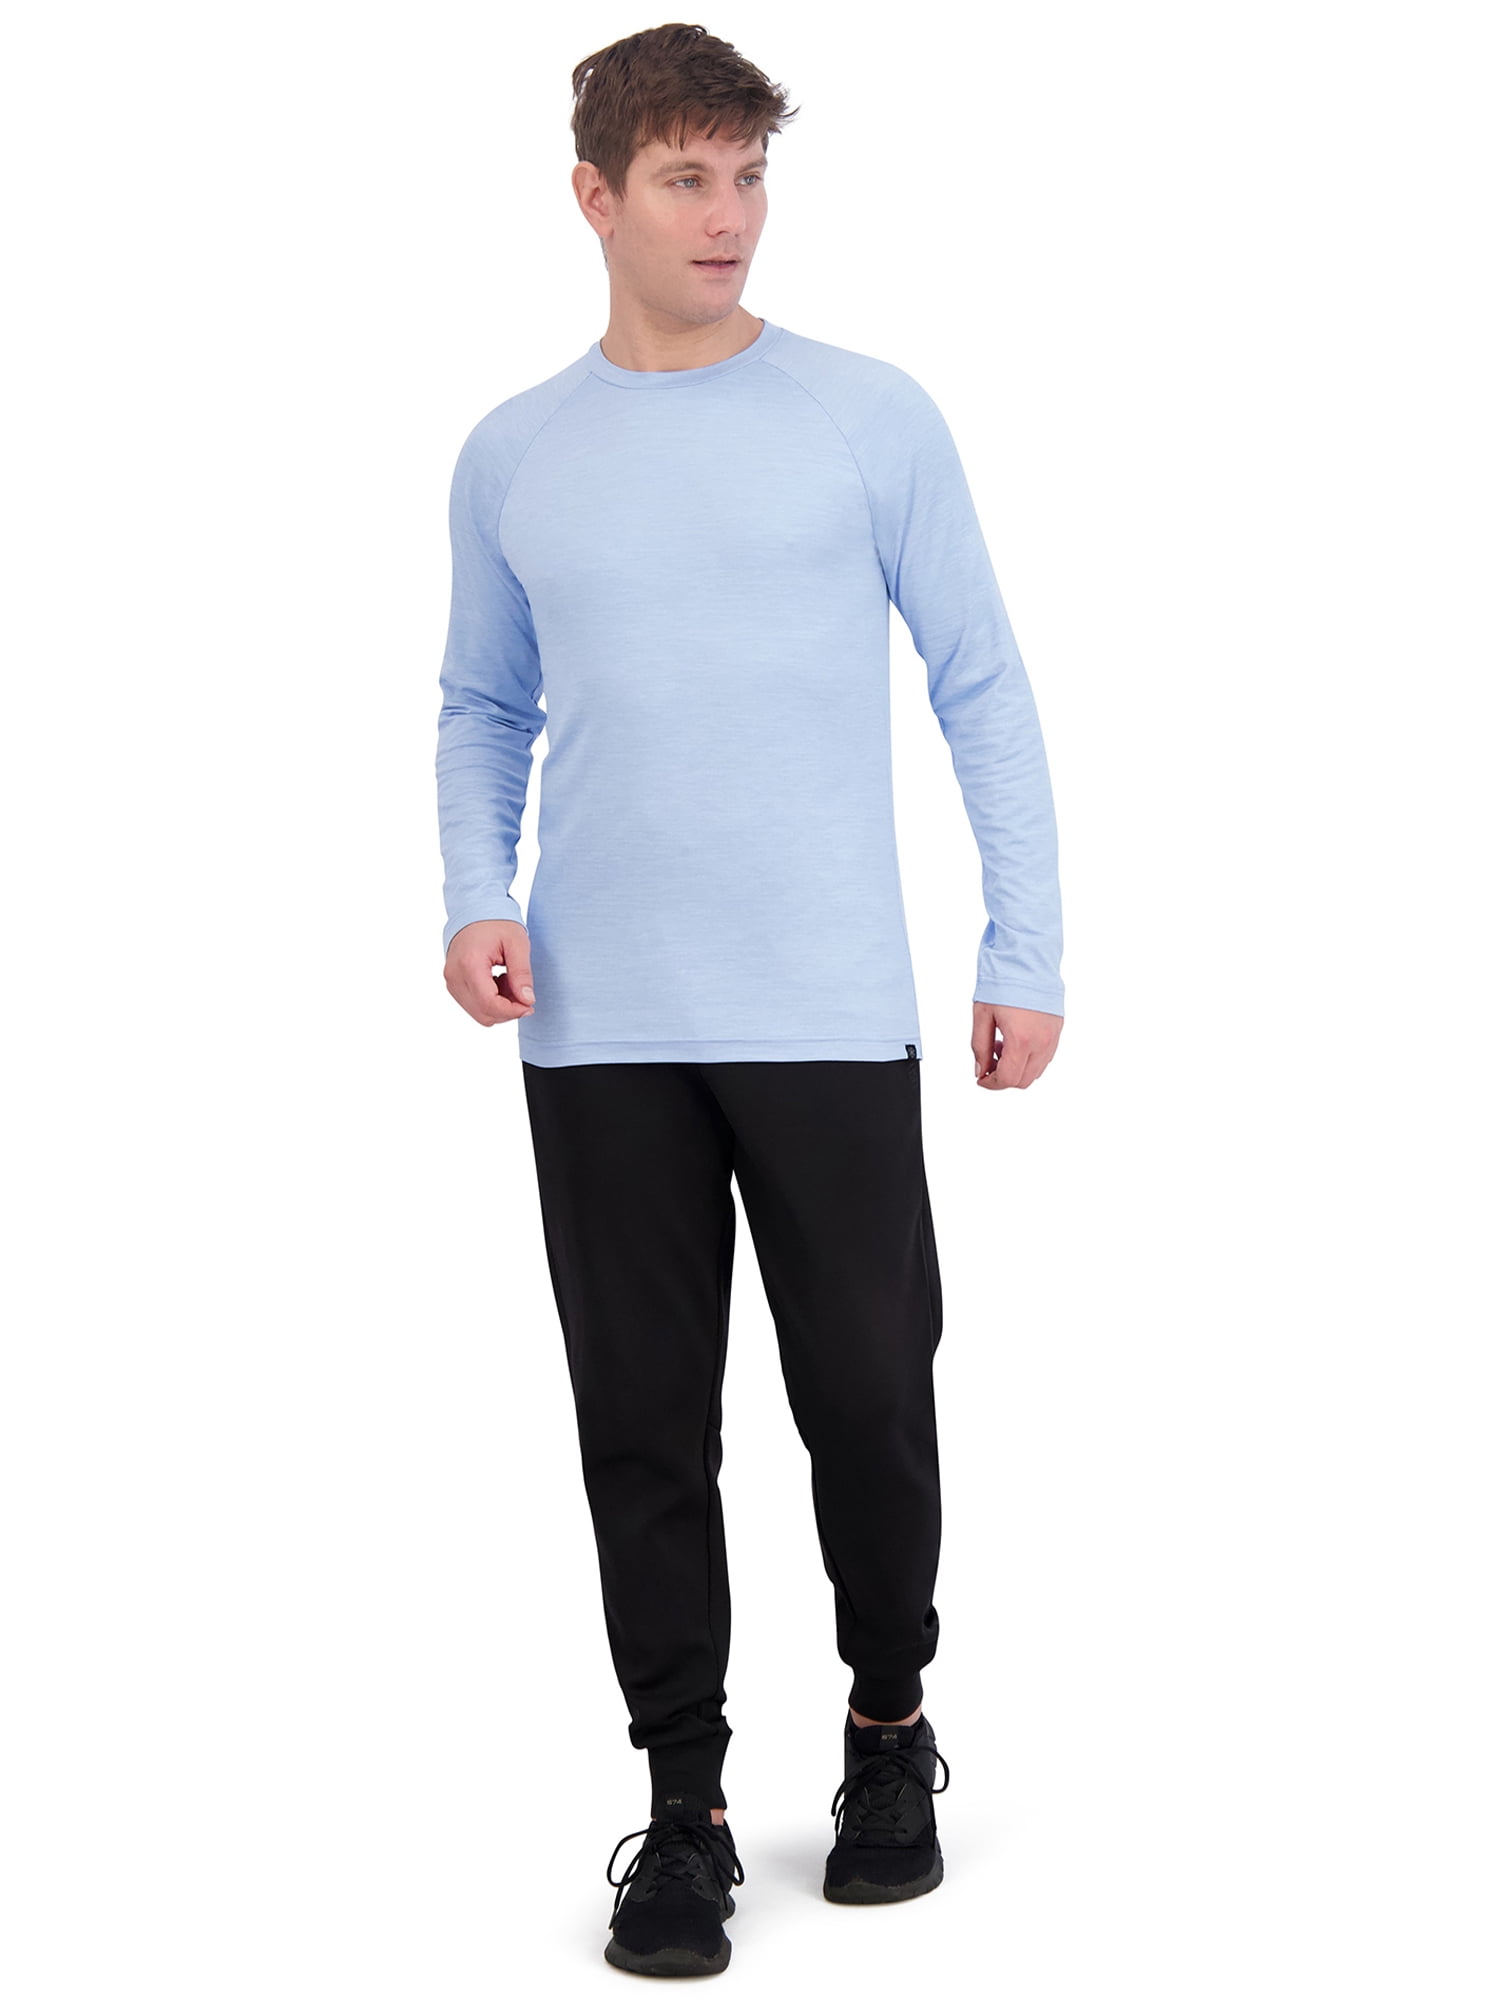 Gaiam Men's Everyday Basic Long Sleeve Tees, Sizes S-XL 